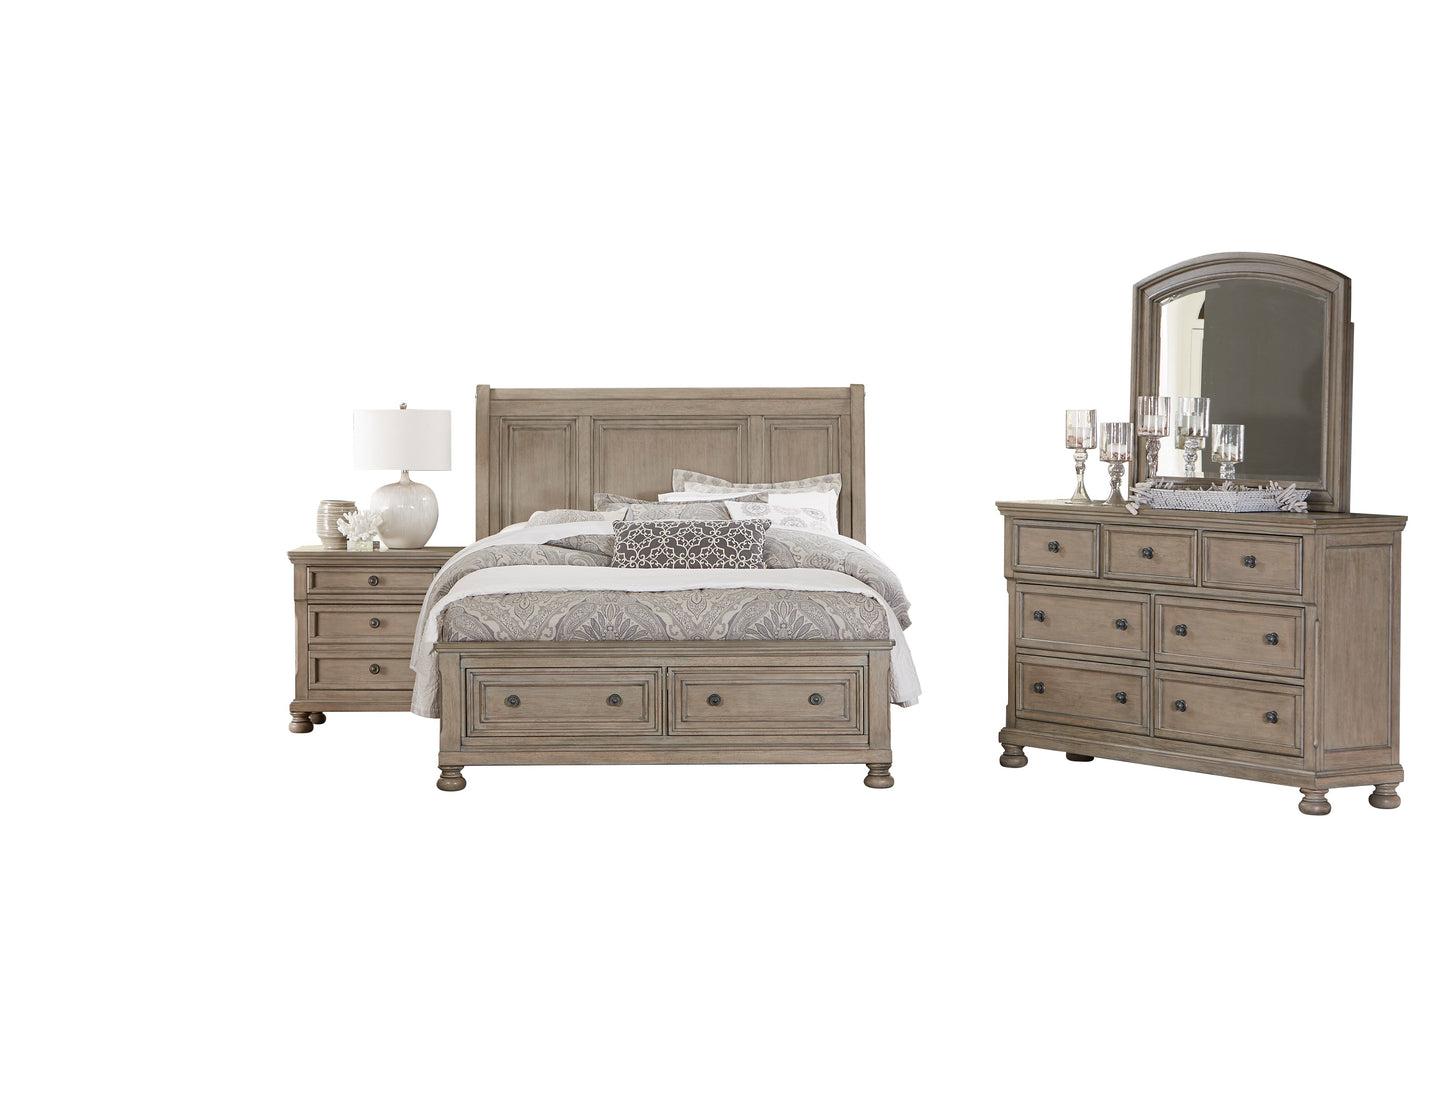 Broville Rustic 4PC Bedroom Set Cal King Sleigh Storage Bed, Dresser, Mirror, Nightstand in Weathered Wood